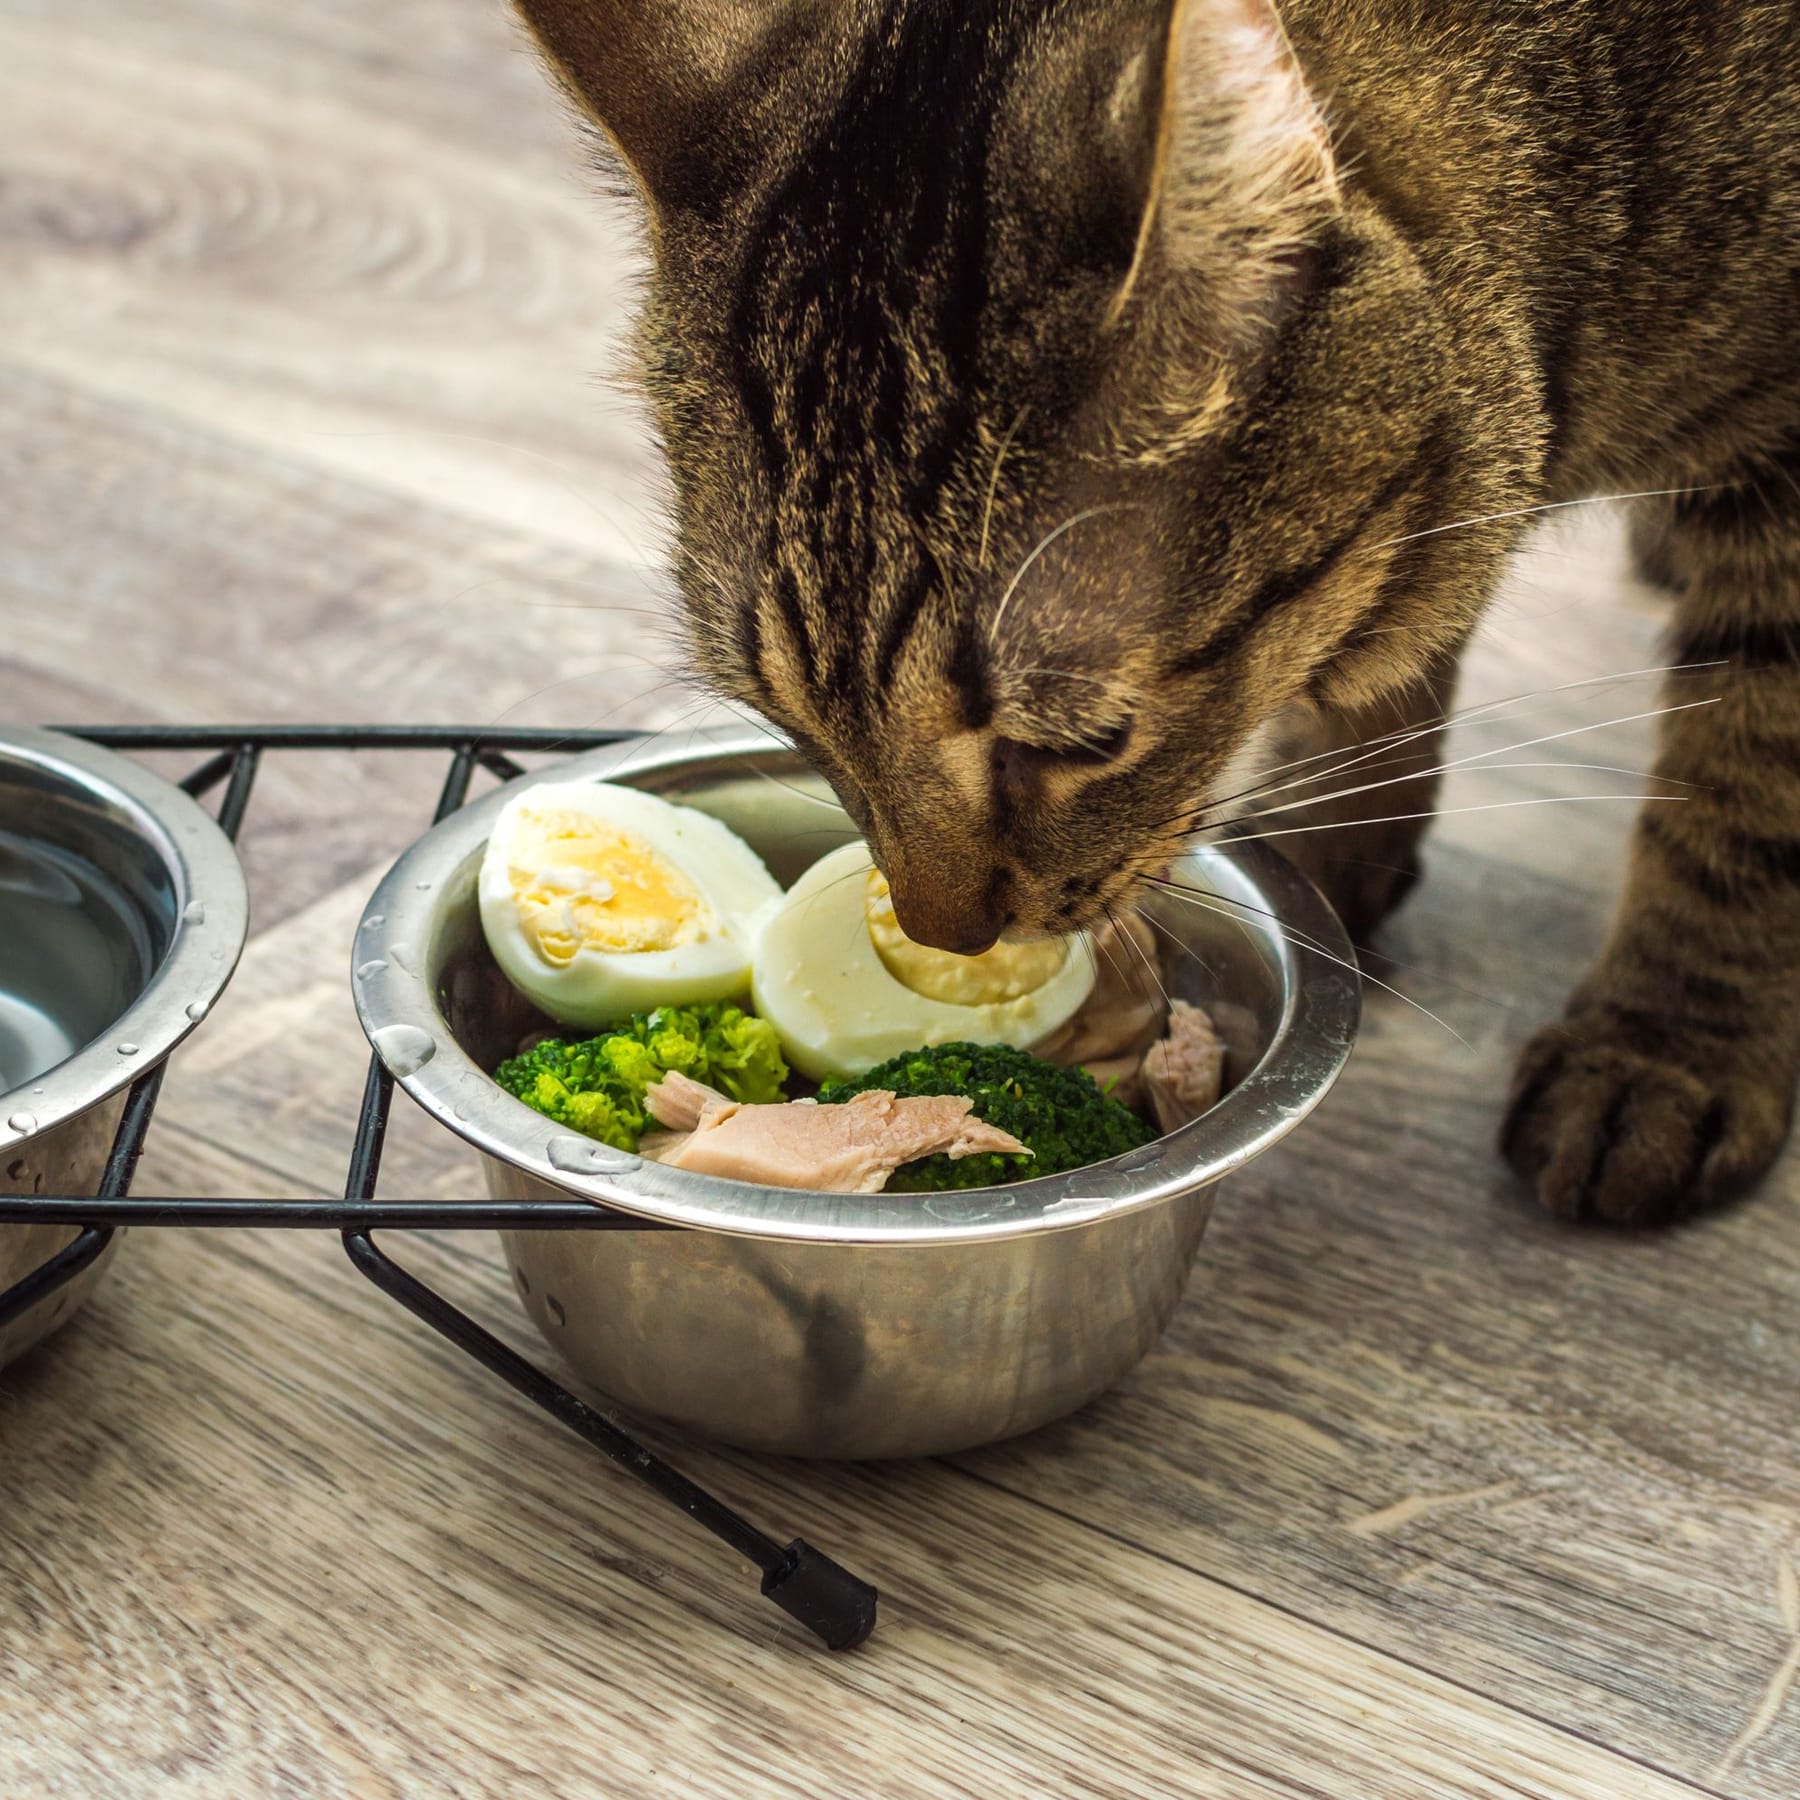 Можно котам кукурузу. Кошка кушает. Кошка ест яичницу. Кот ест яйца вареные. Кот ест.